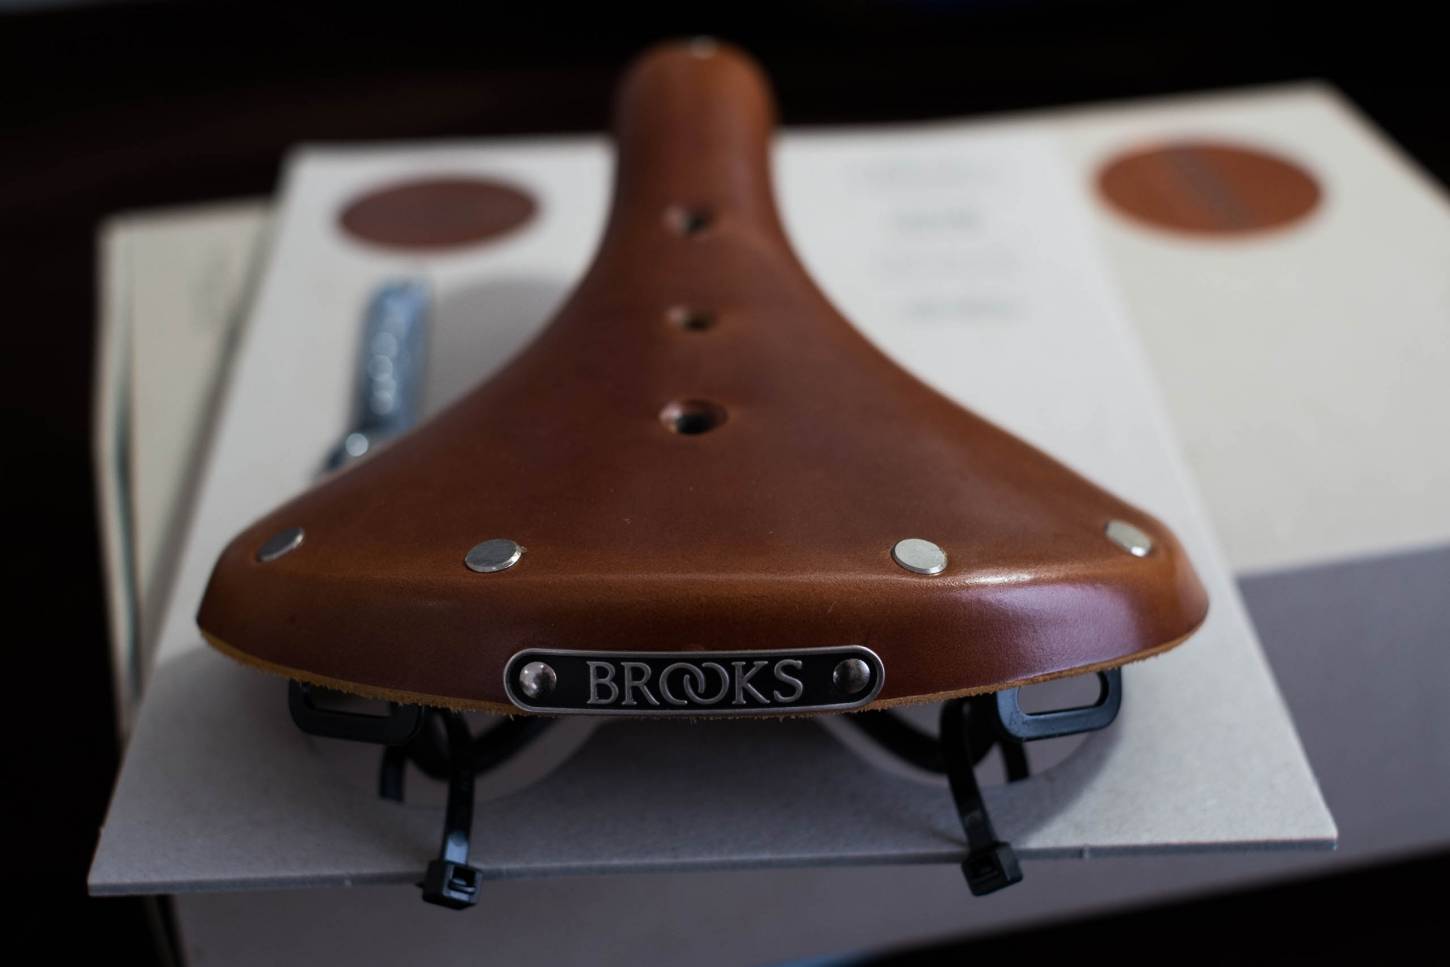 Brooks B17 S Standard Sattel Kernleder Damen Classic Saddle in black + brown + honey